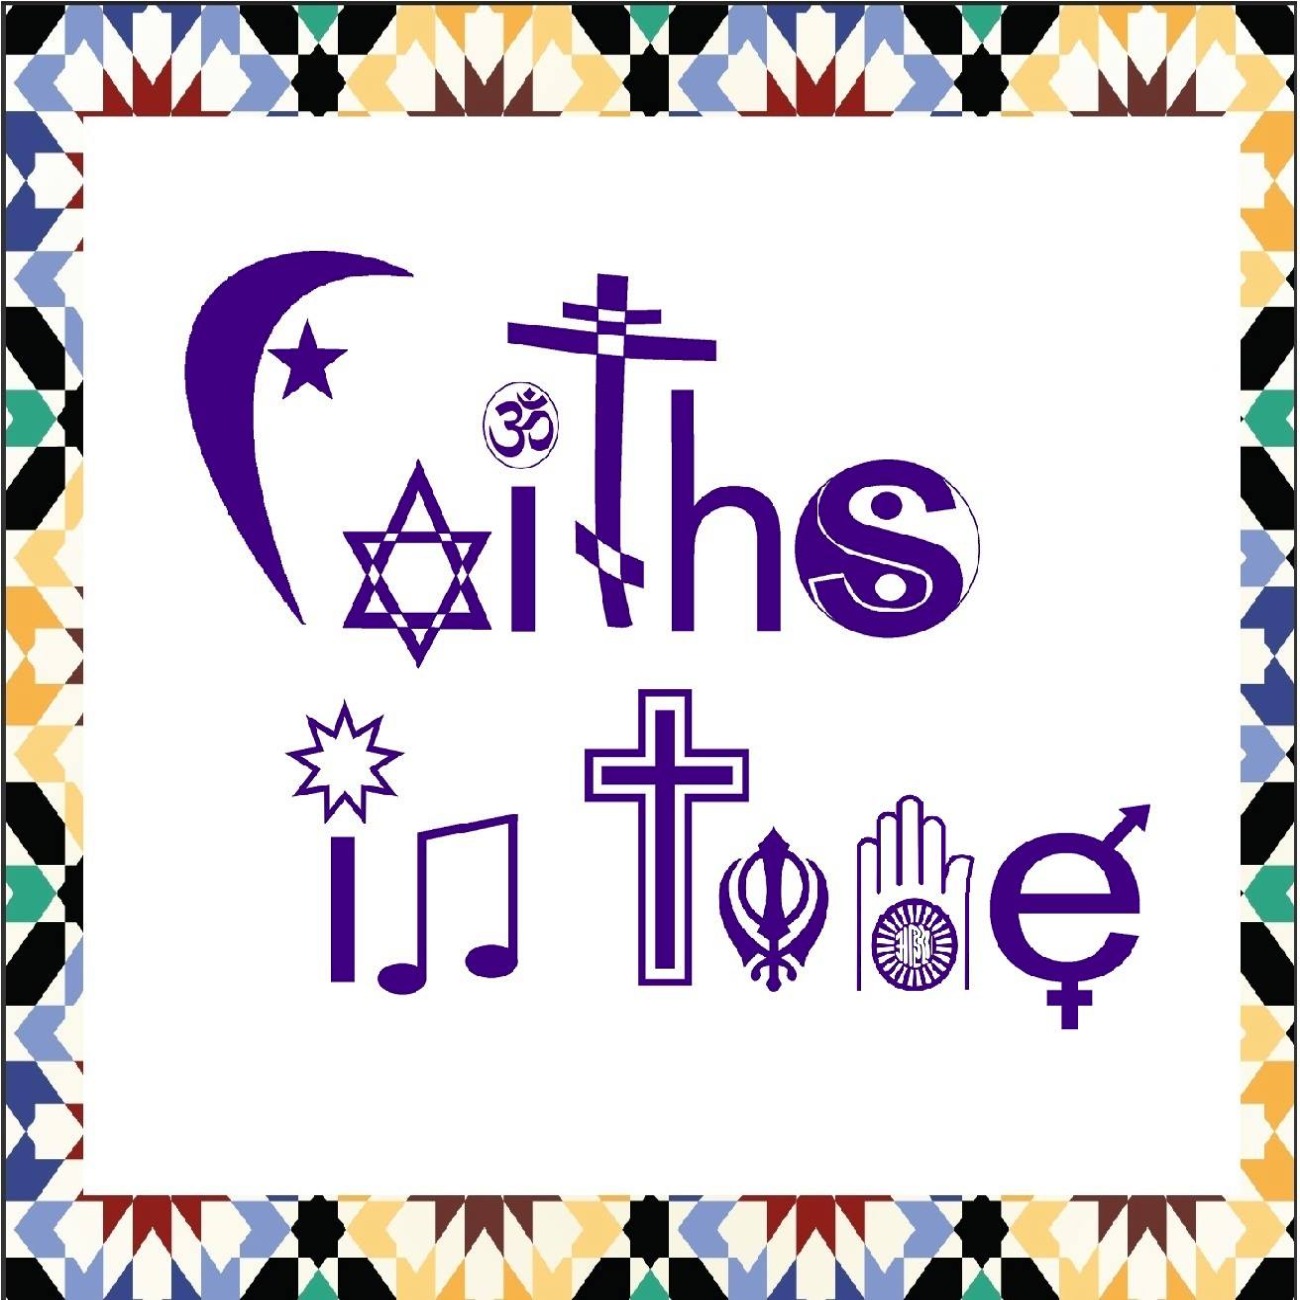 faiths in tune logo